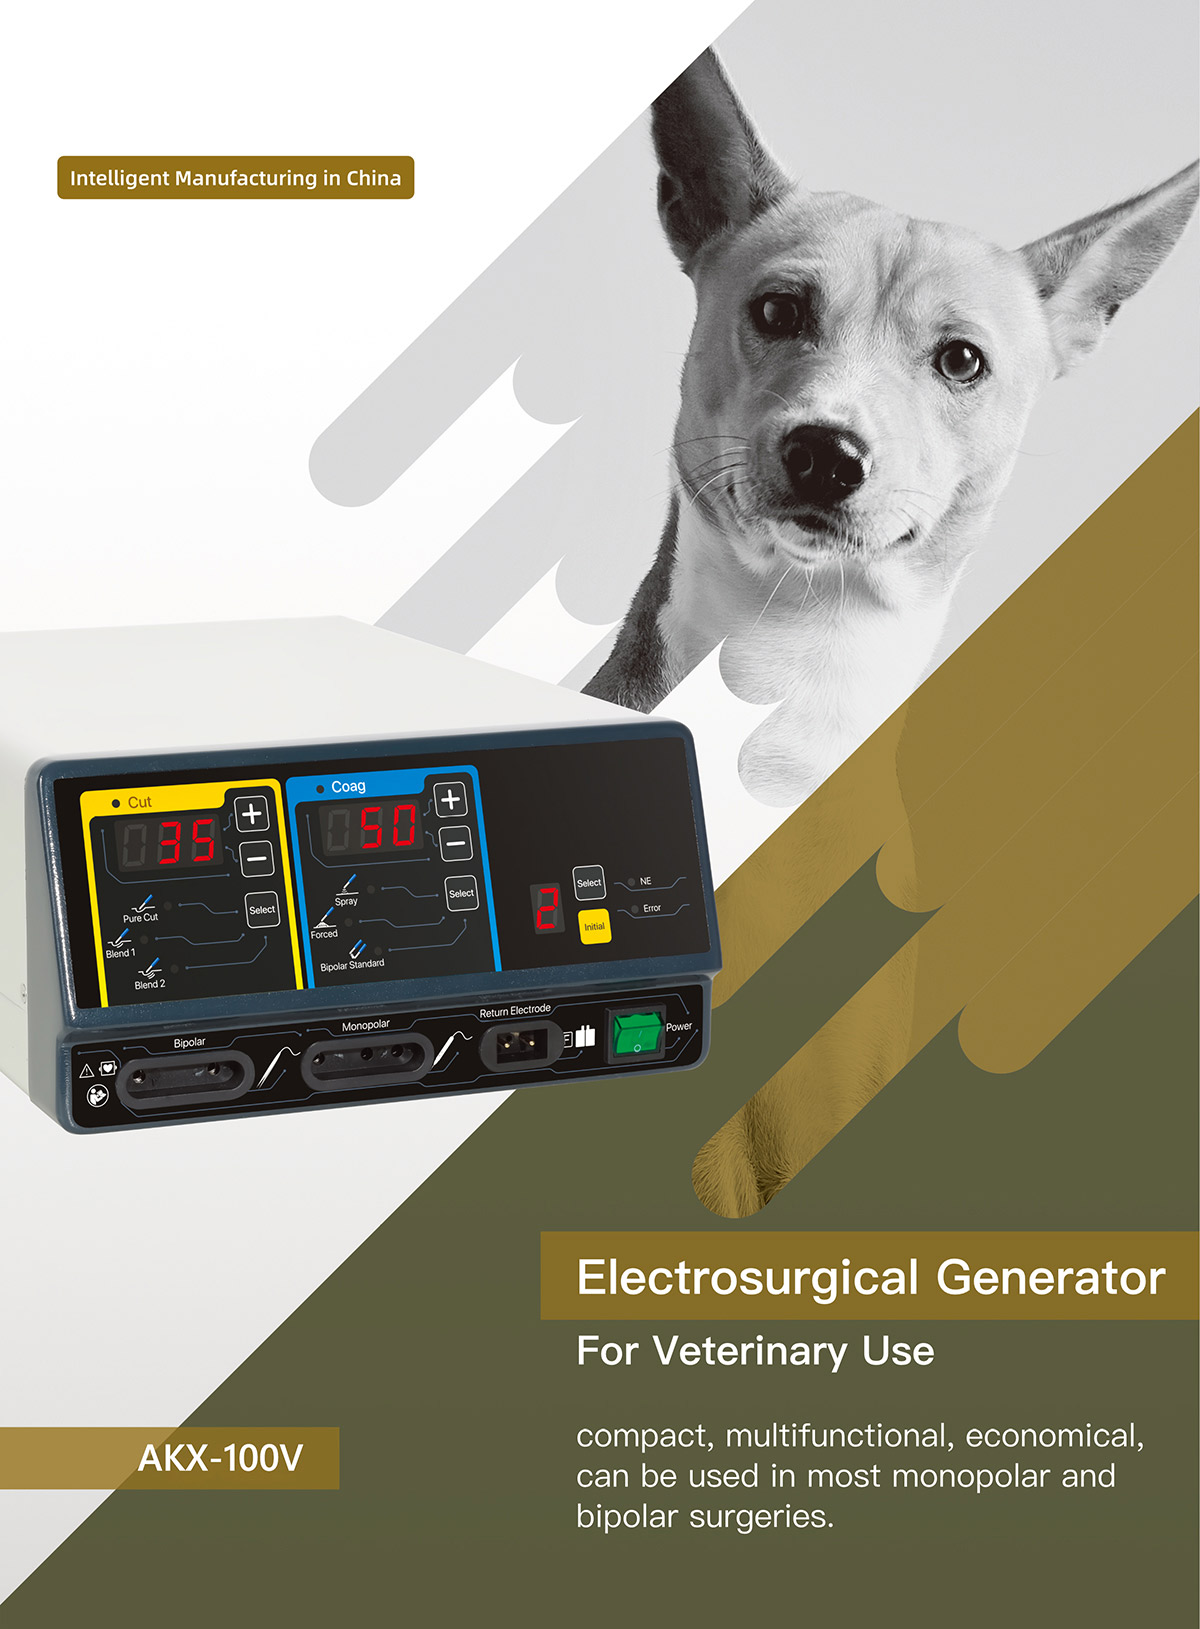 AKX-100V Electrosurgical Generator For Veterinary Use